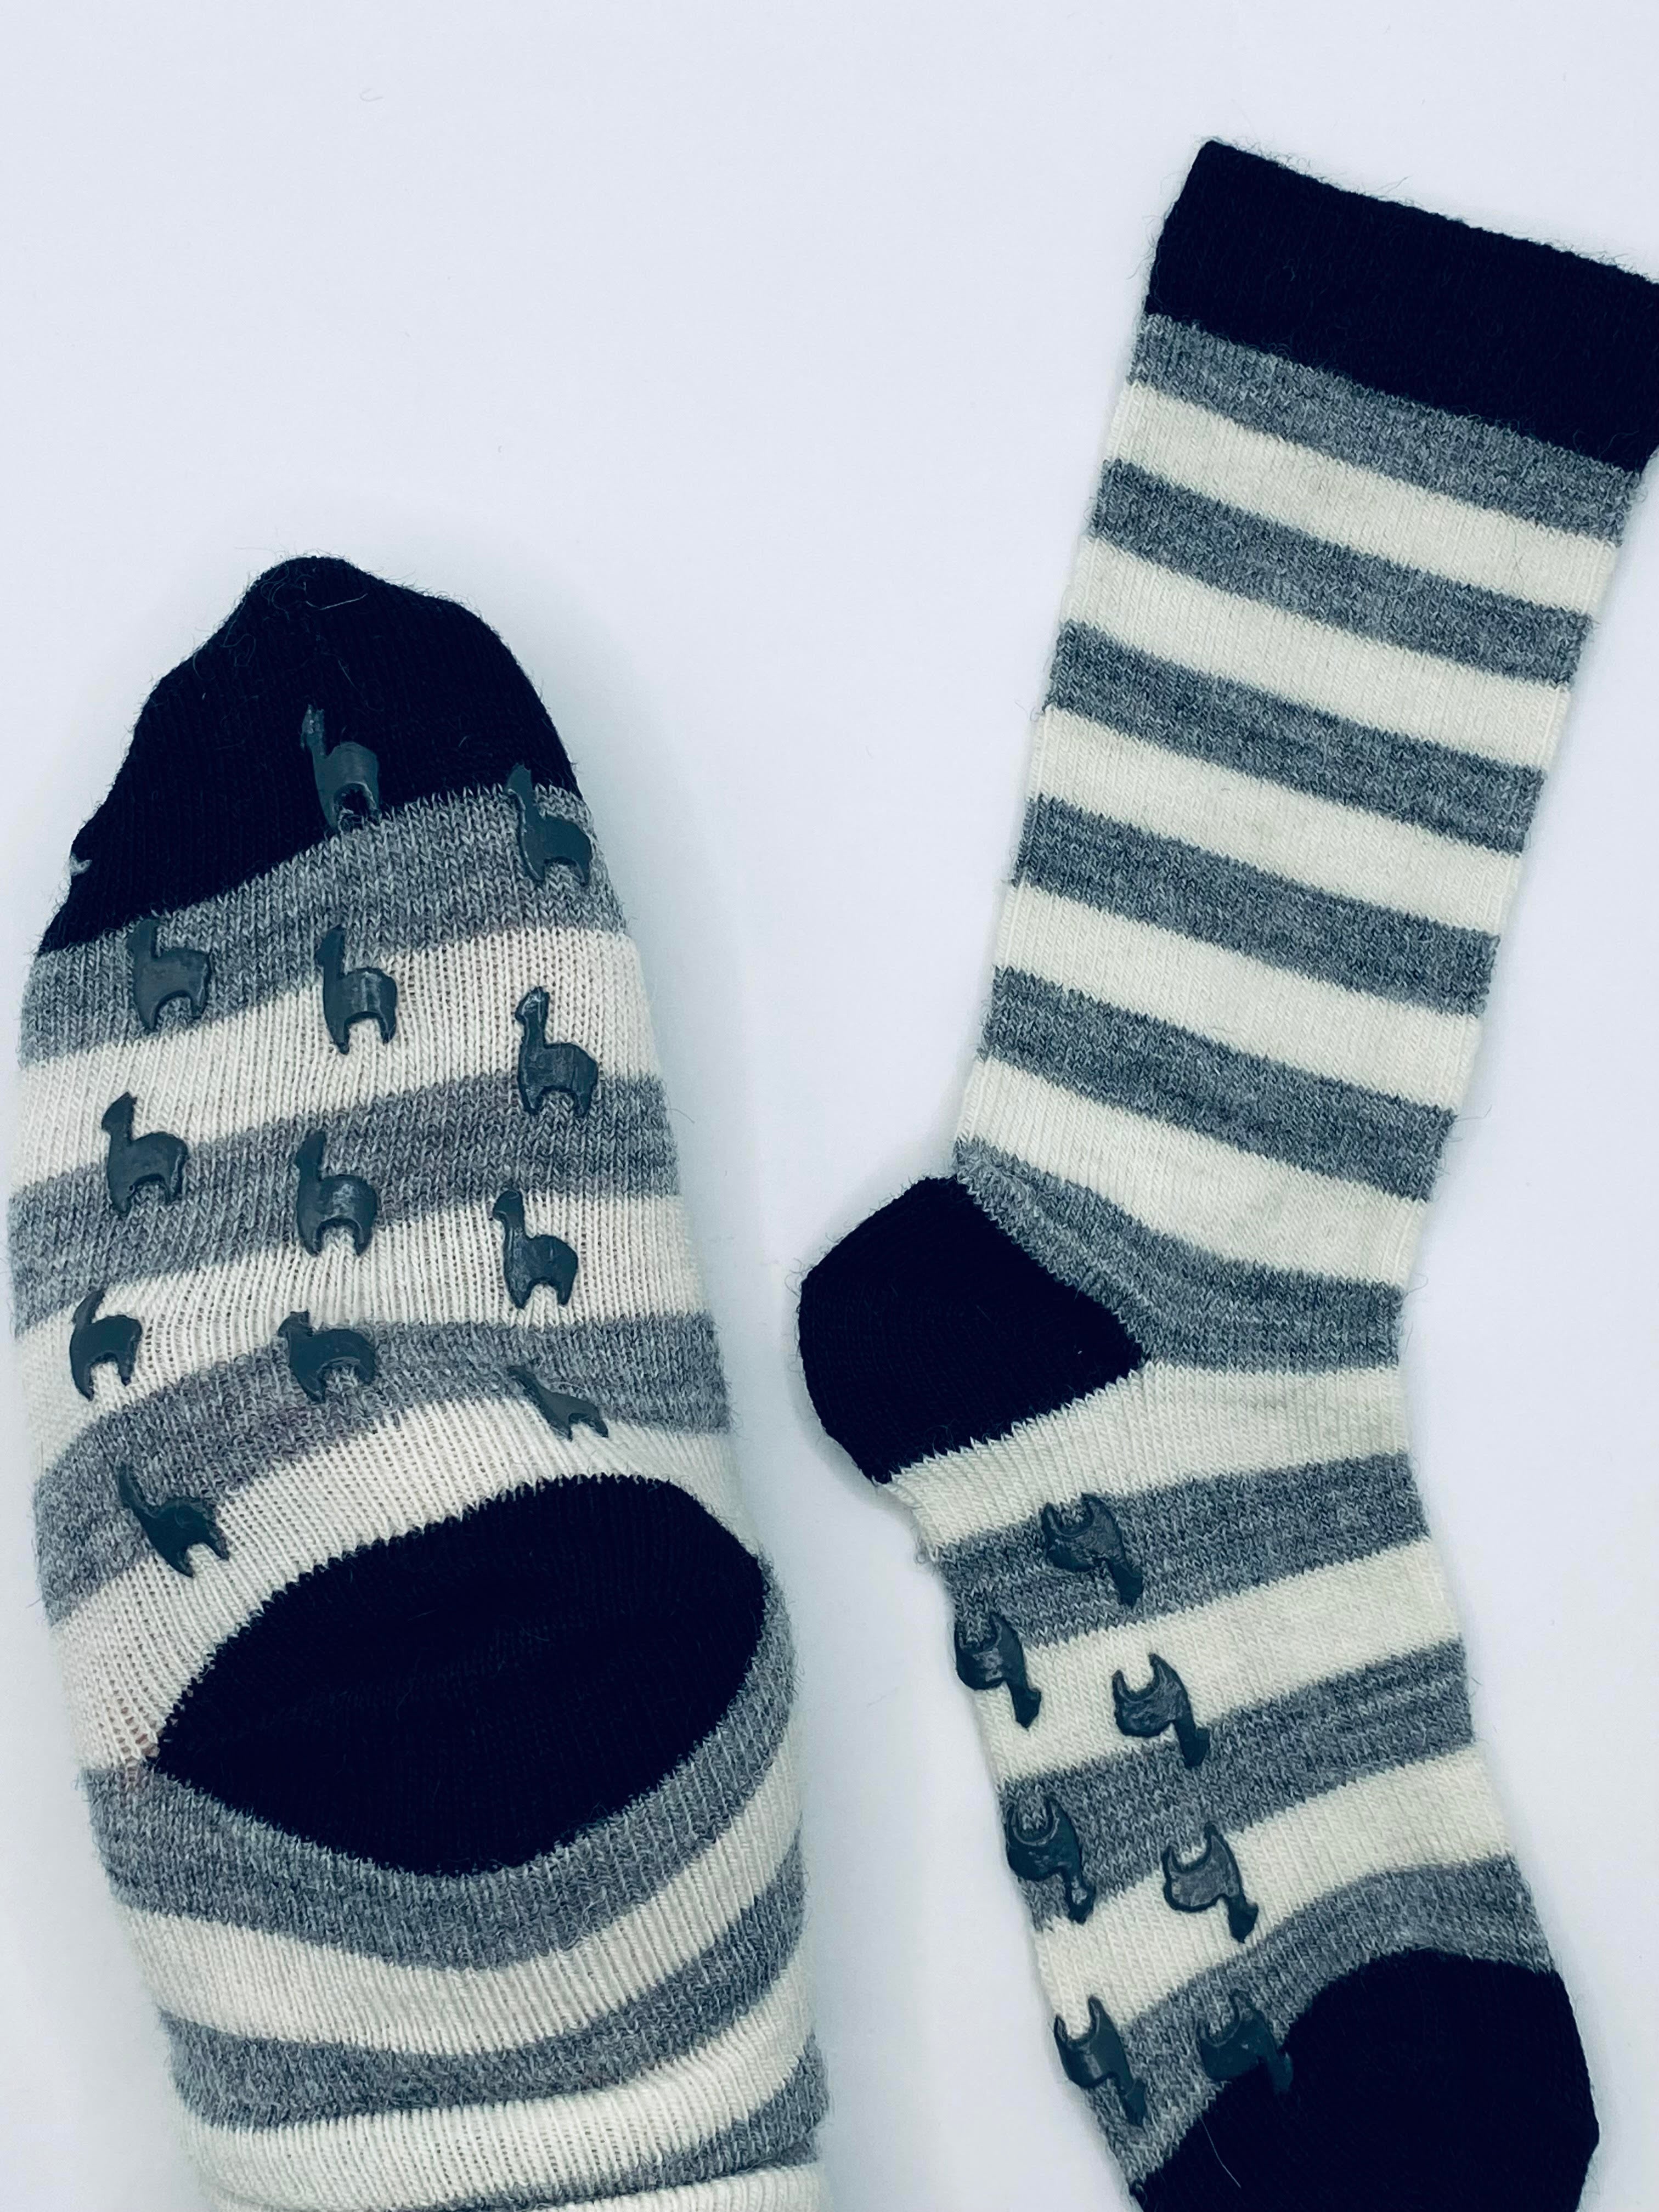 "Premium Striped Toddler Alpaca Socks with Non-Skid | Soft & Warm Children's Alpaca Wool Socks".